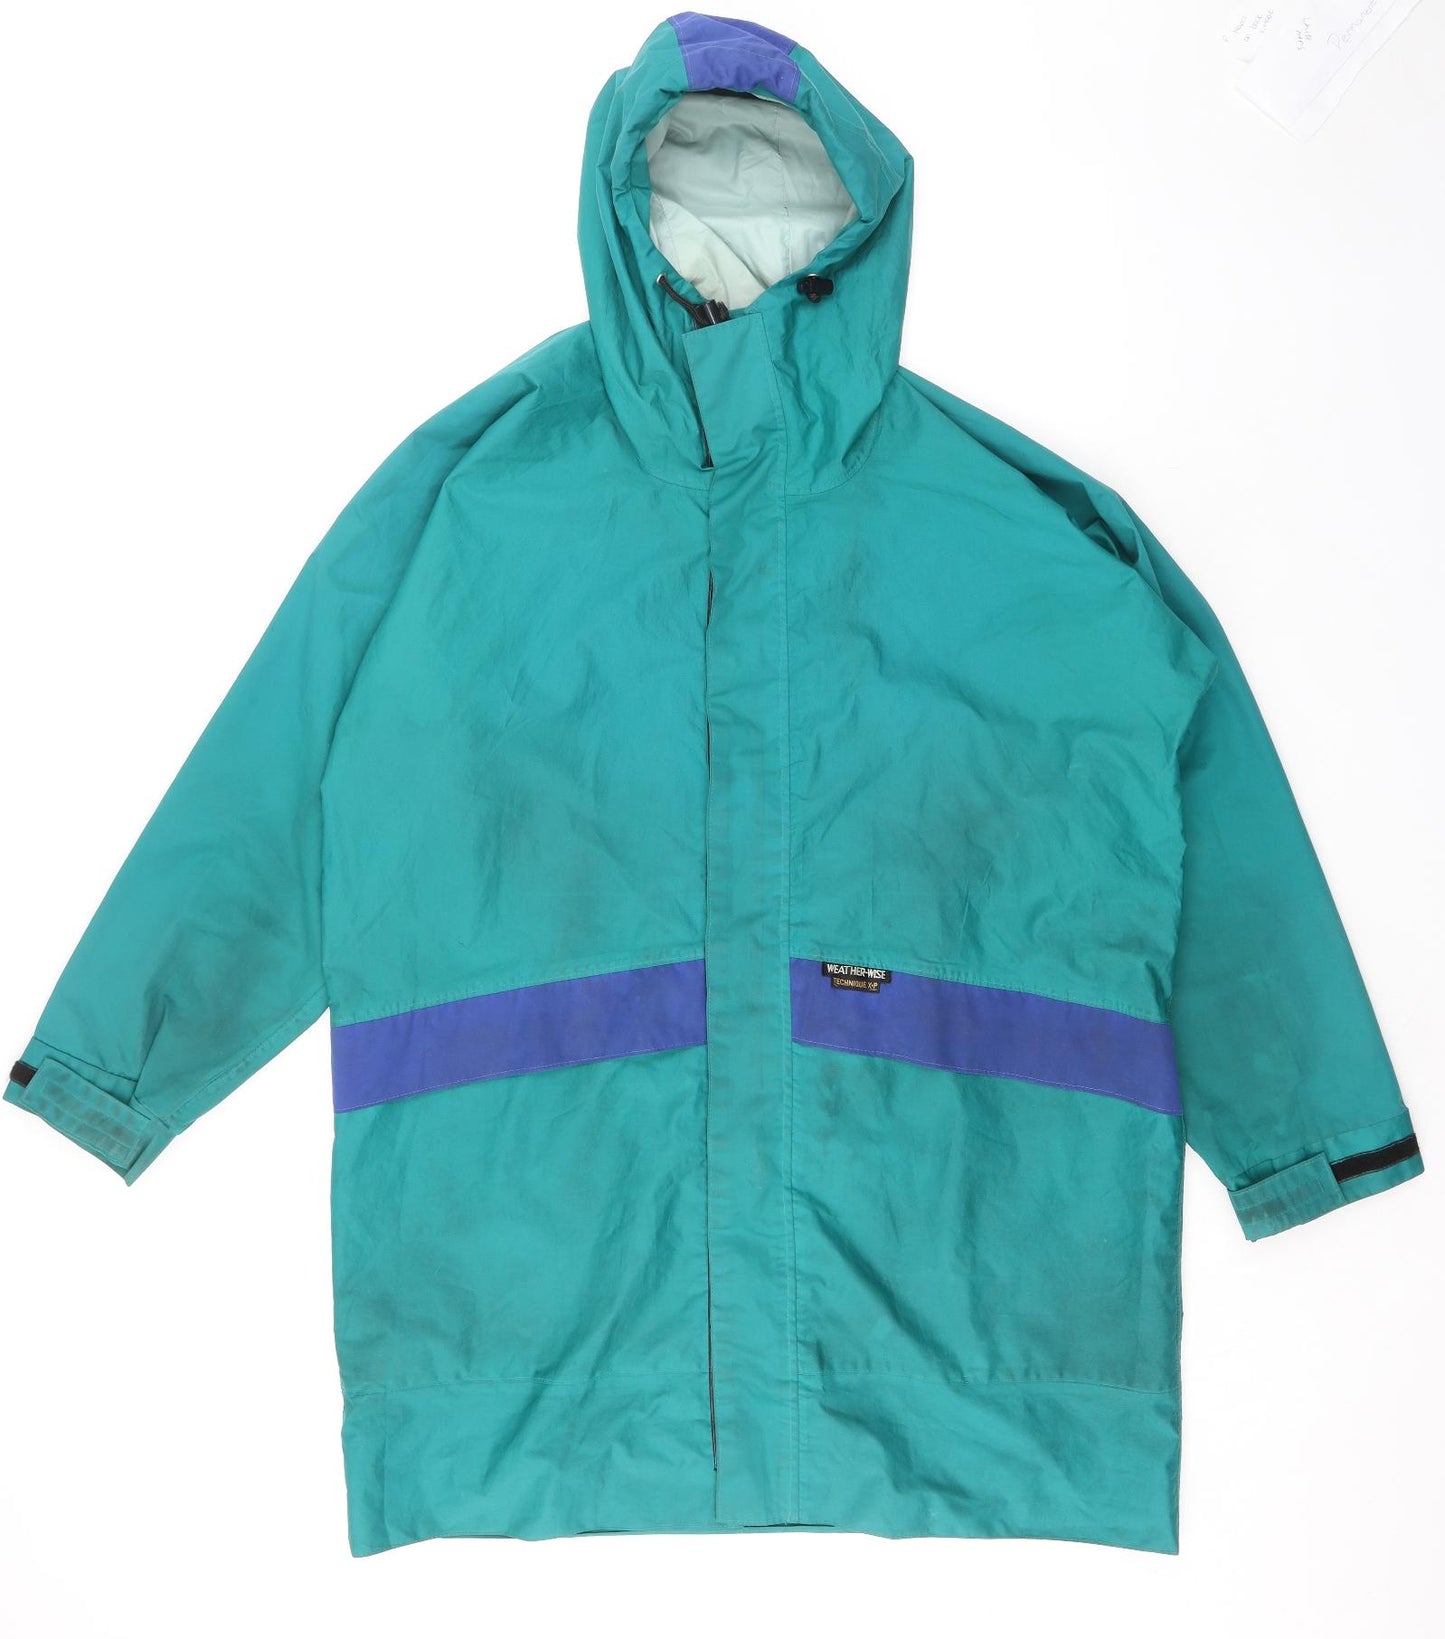 MILAIR Mens Green Rain Coat Jacket Size L Zip